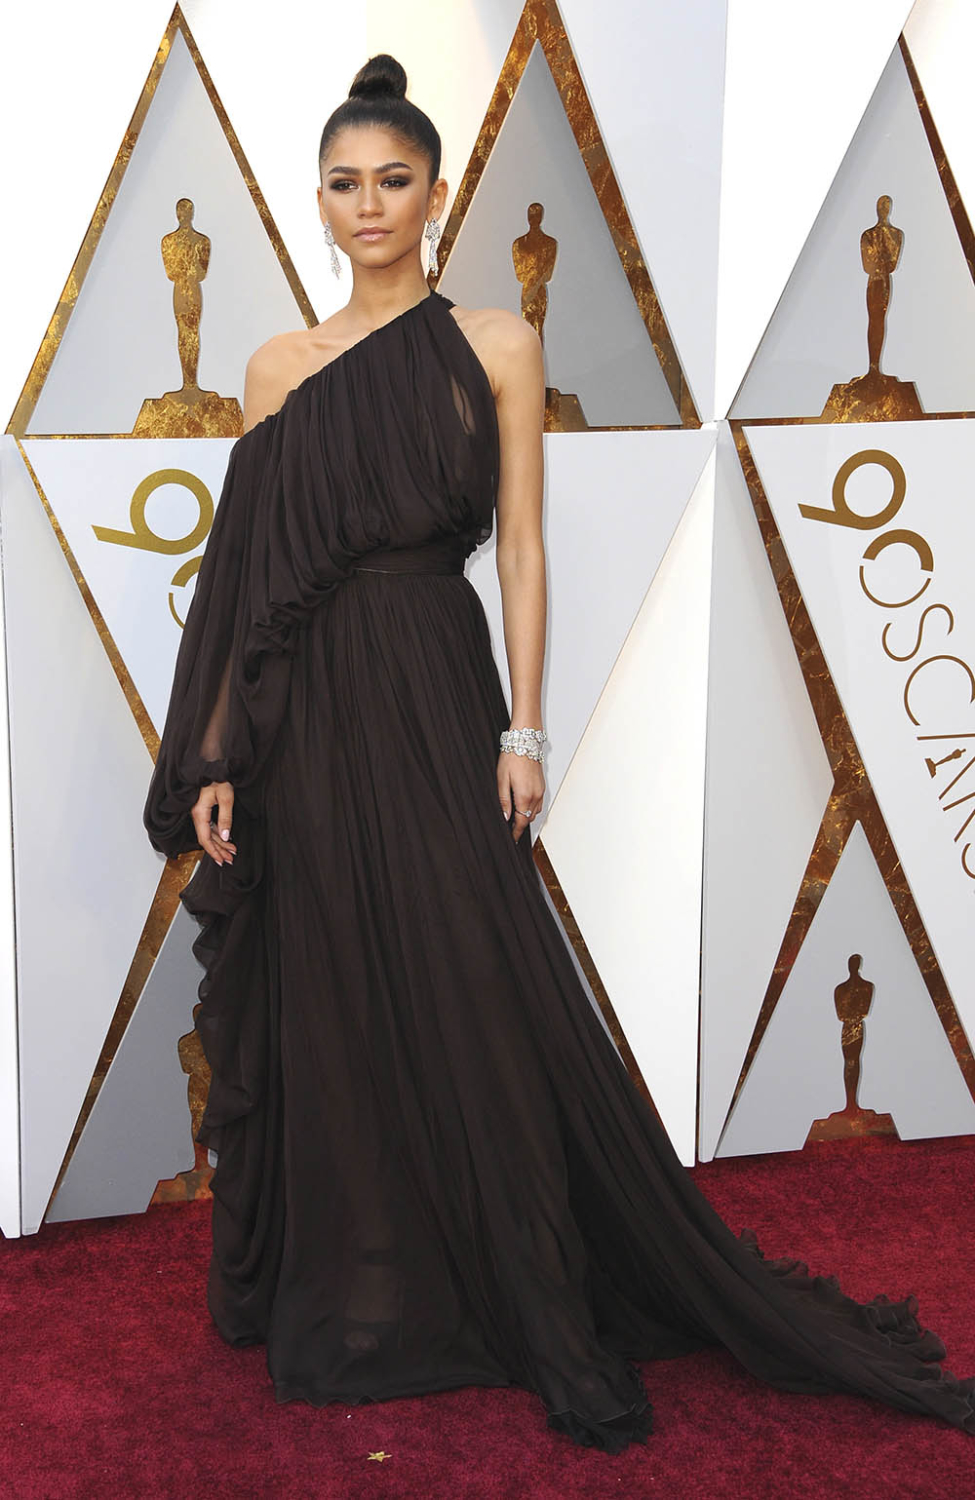 Zendaya Coleman at the 90th Annual Academy Awards